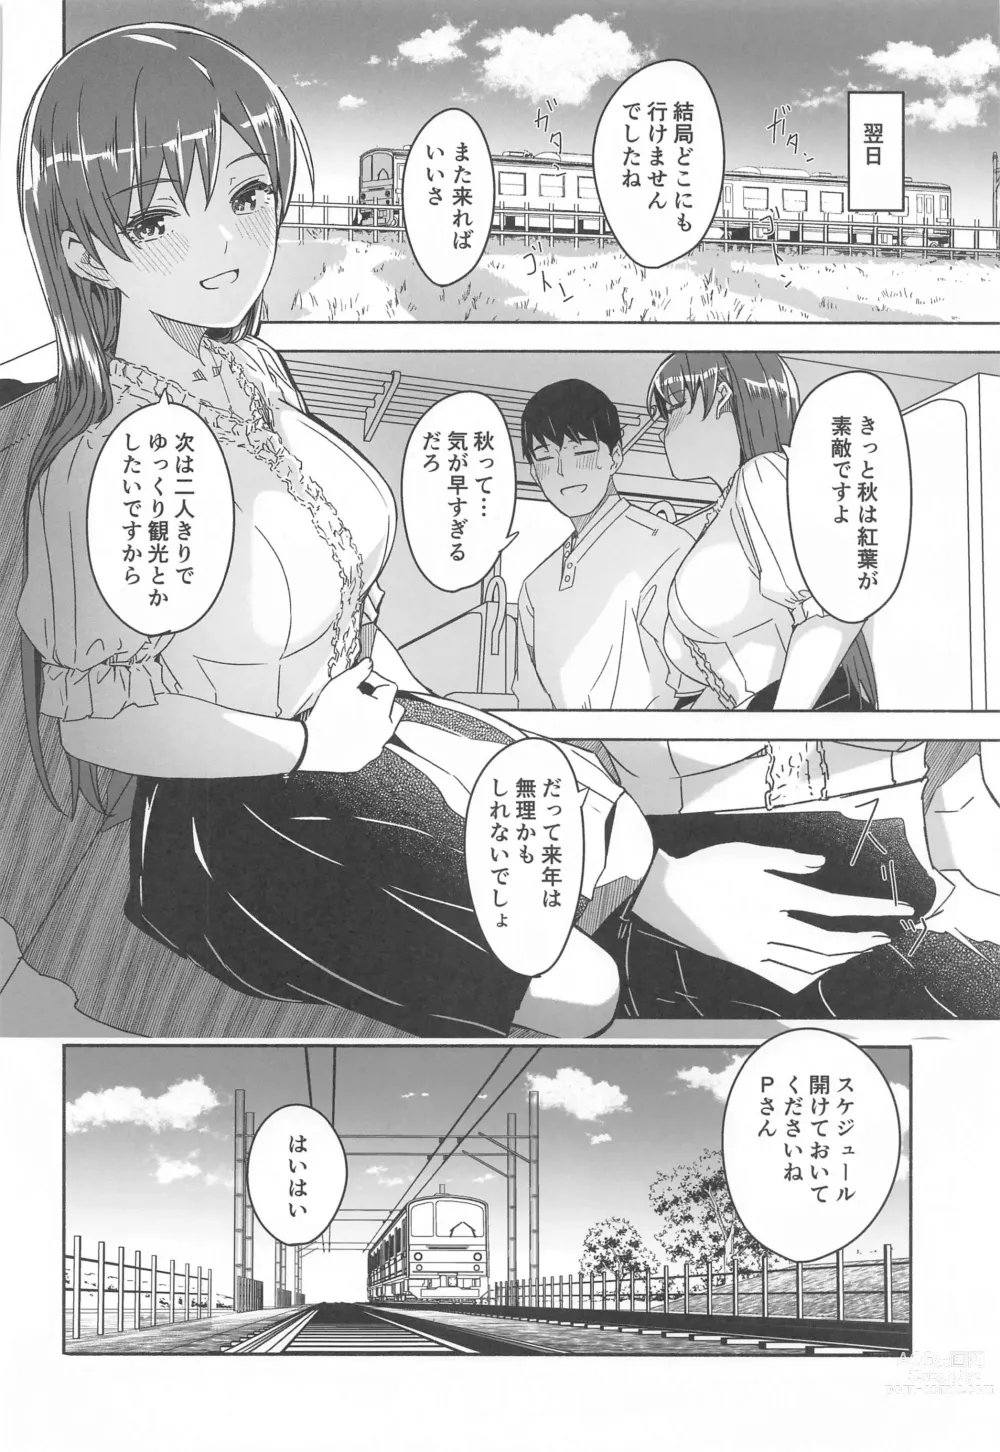 Page 39 of doujinshi Otona no Himegoto